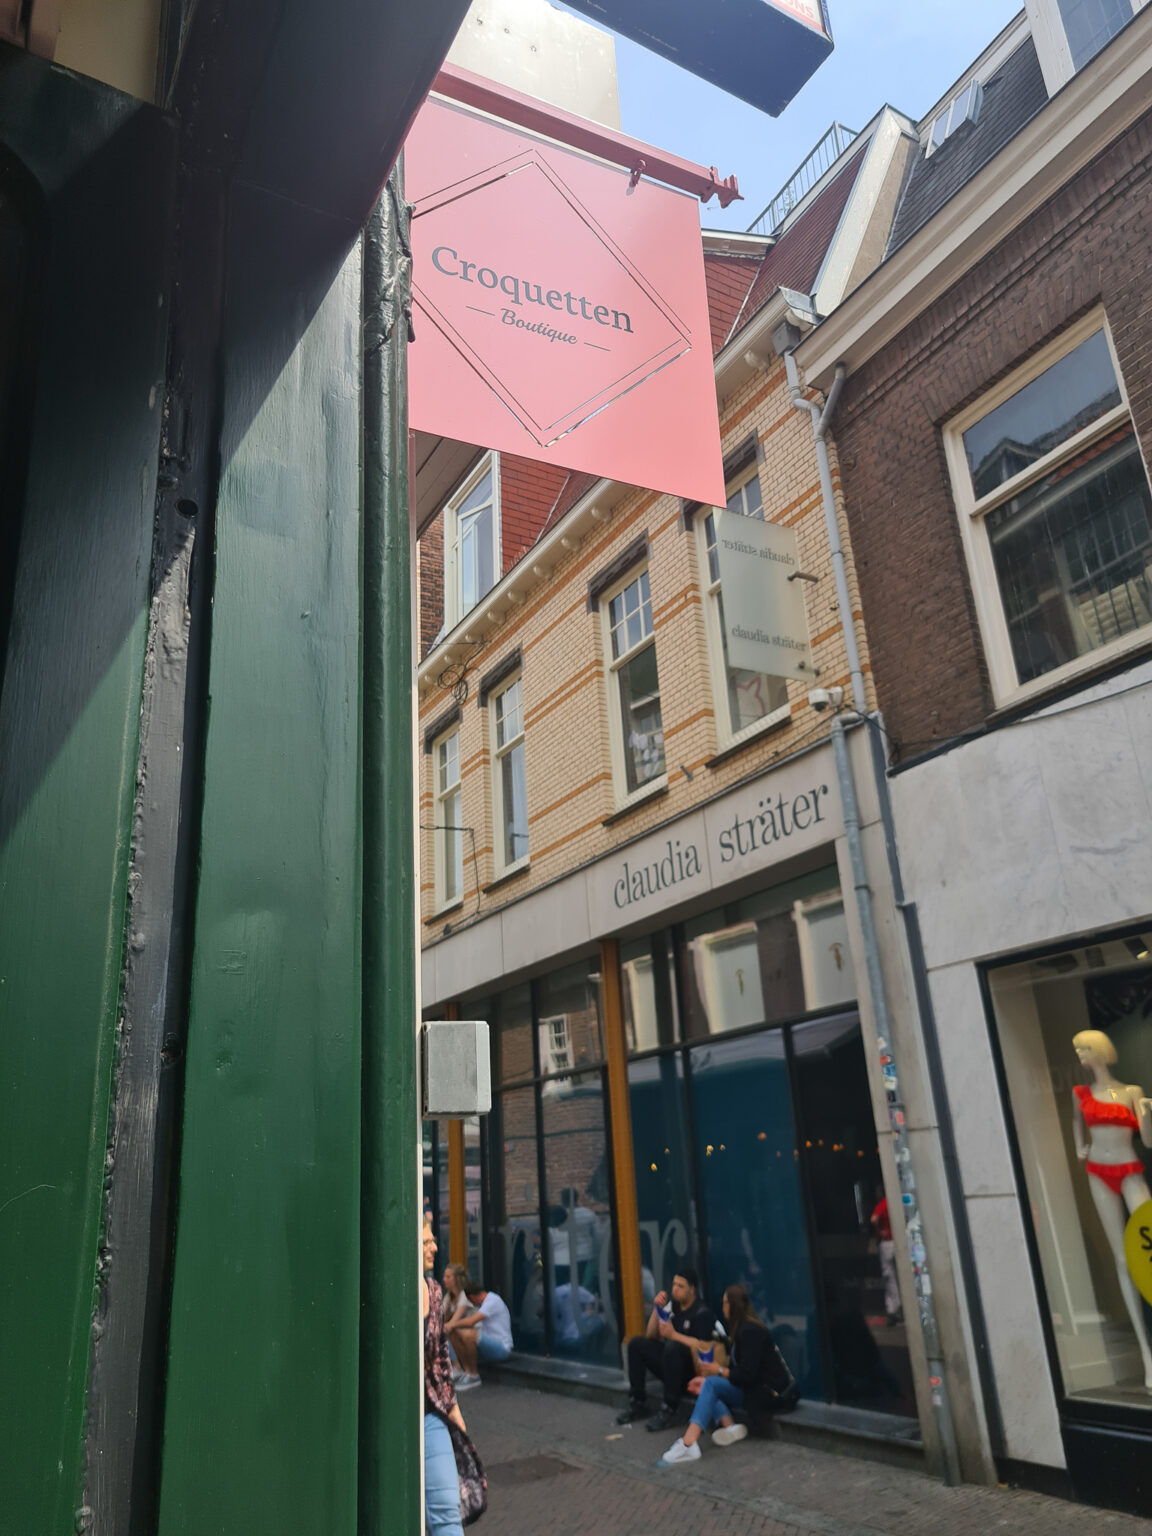 Croquetten Boutique Utrecht